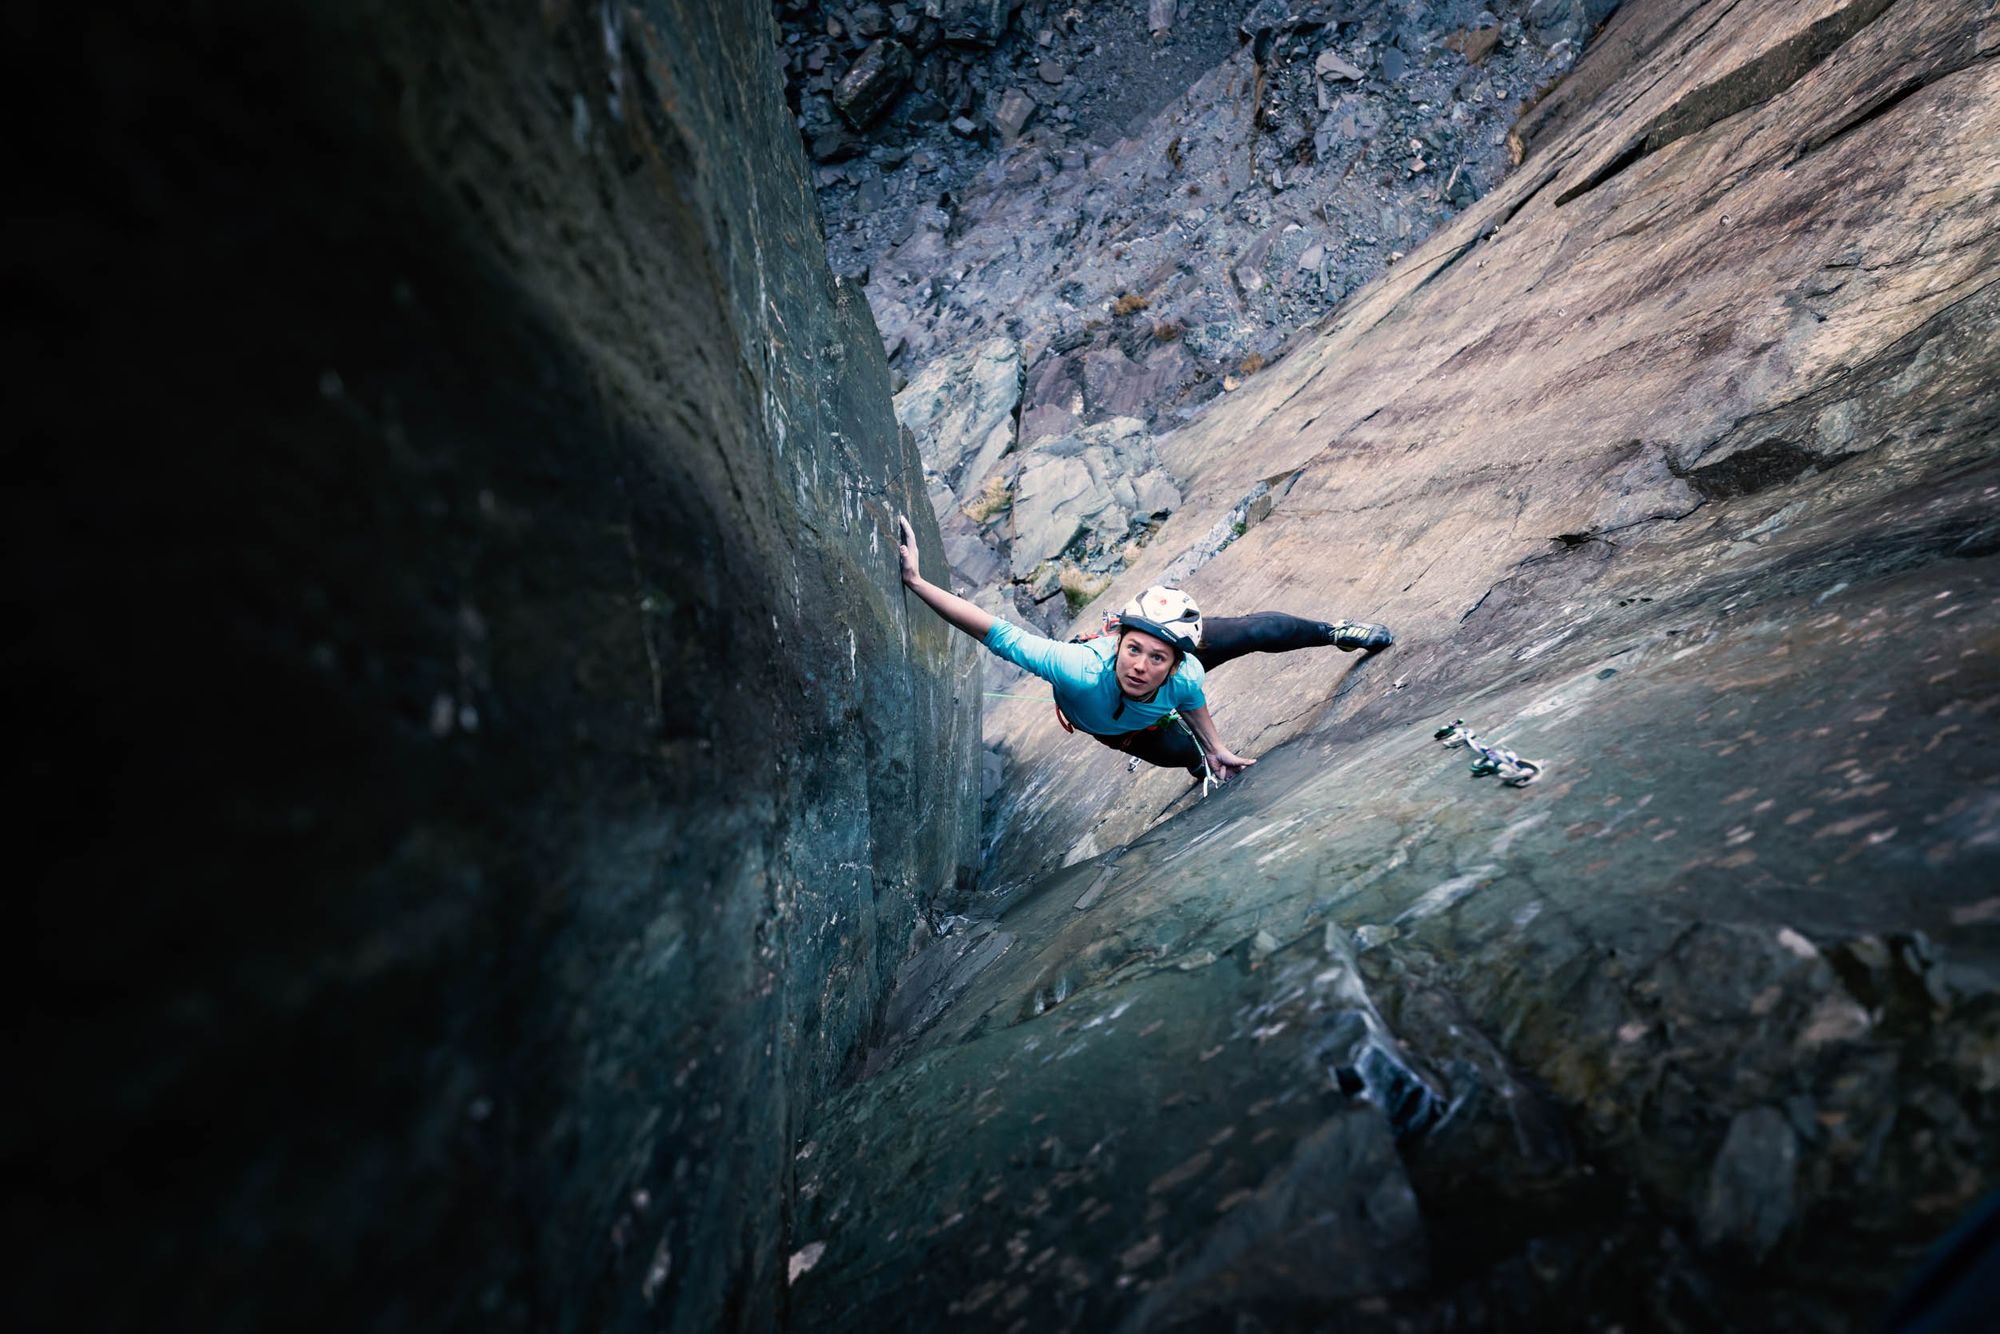 Caroline Ciavaldini climbing The Quarryman in North Wales, where she made the first female ascent. Photo: Chris Prescott / Dark Sky Media